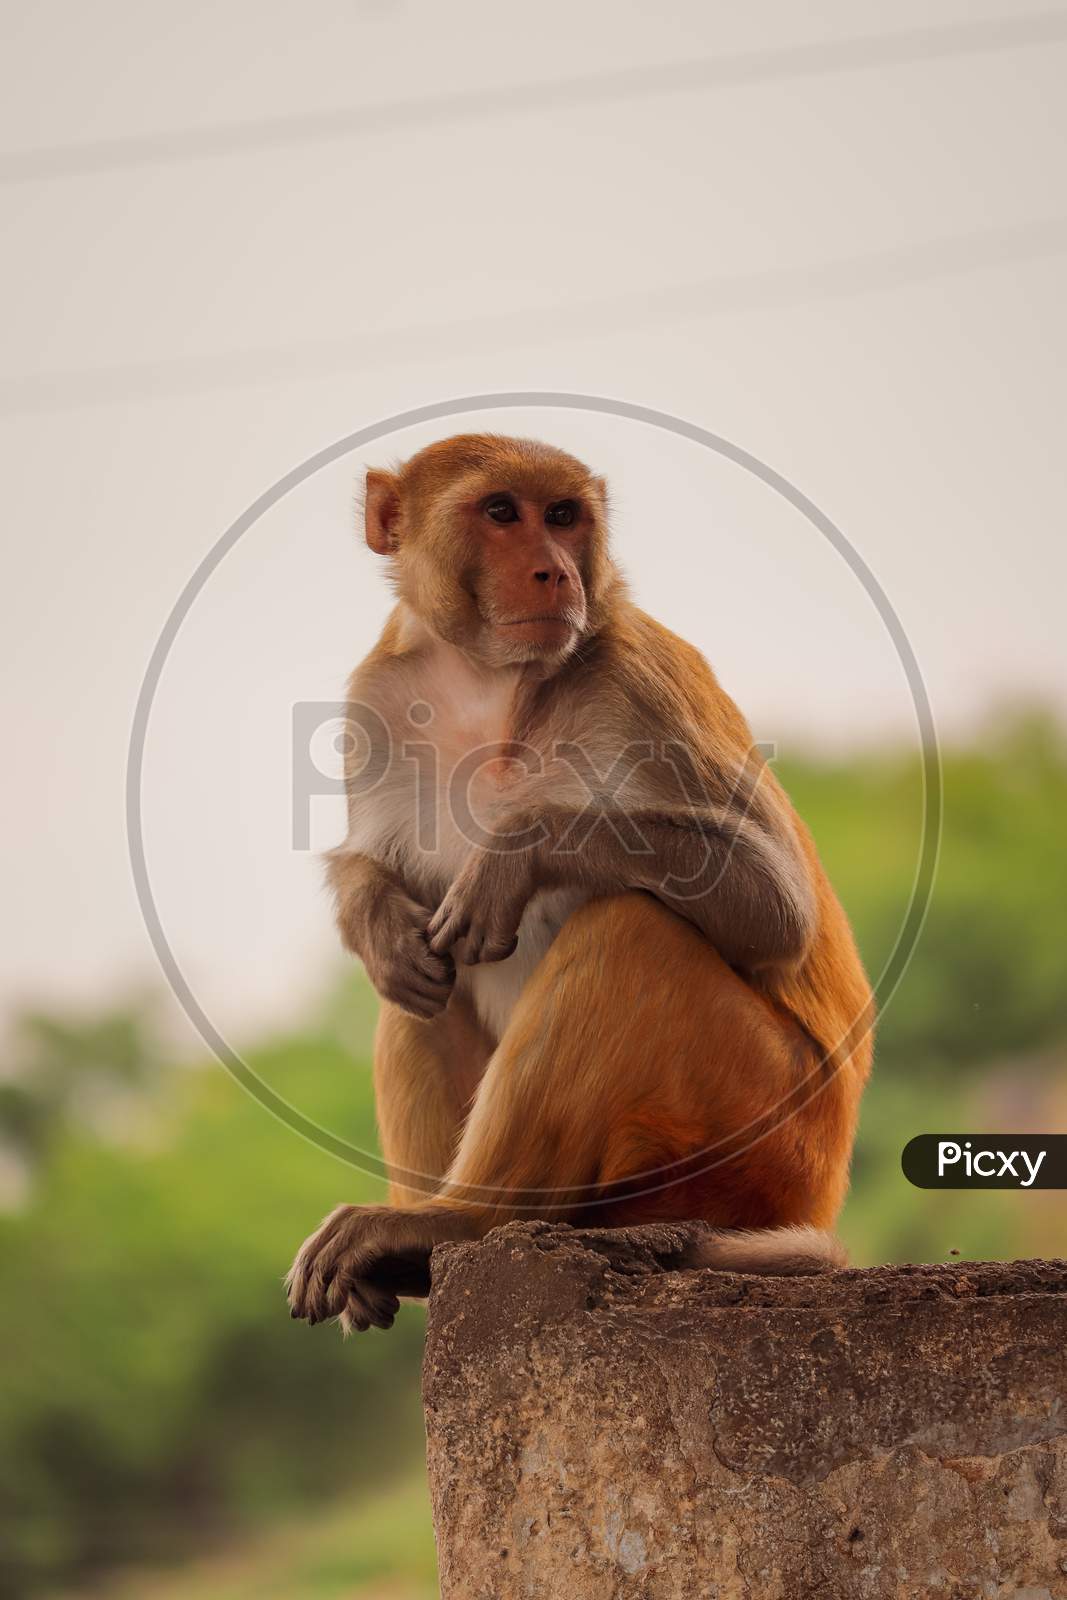 Funny Monkey Pose Stock Photo 1194625762 | Shutterstock